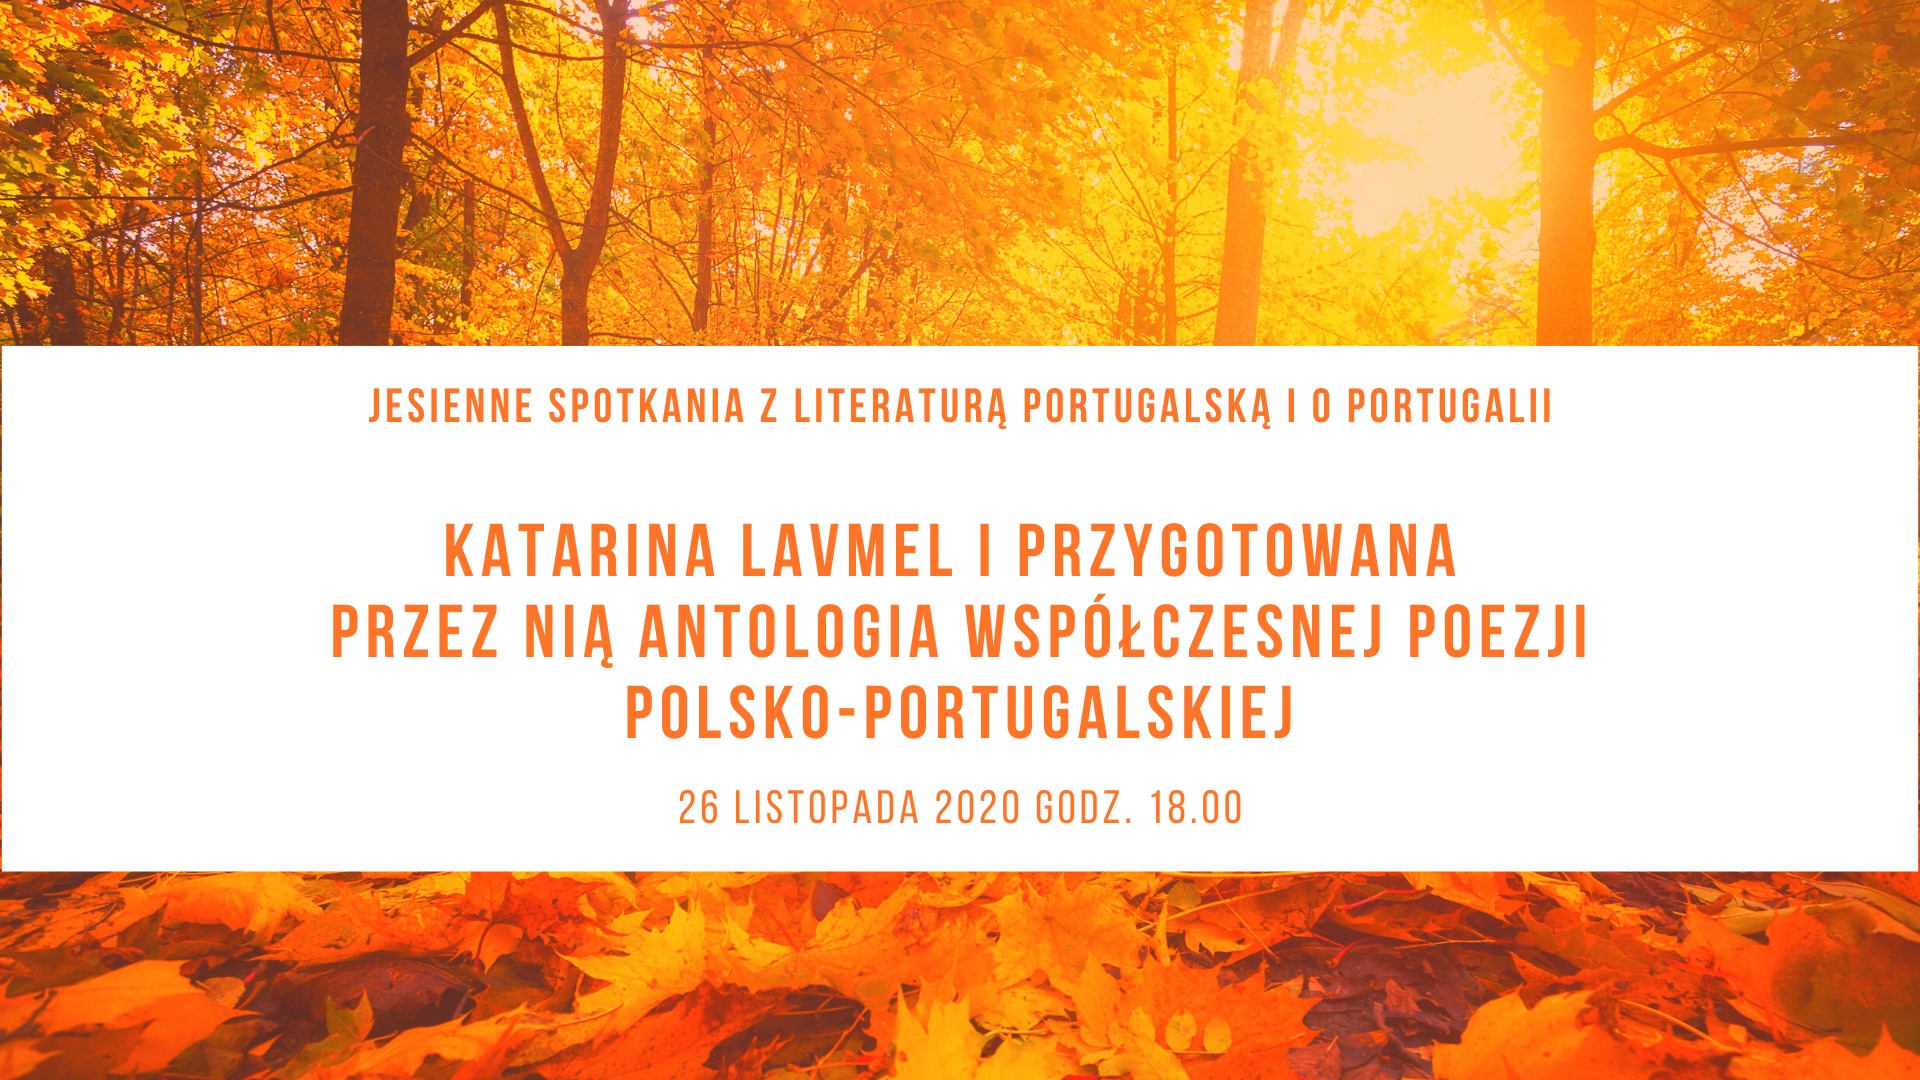 Encontros de outono com literatura portuguesa  “My Lisbon Story” Katowice 2020